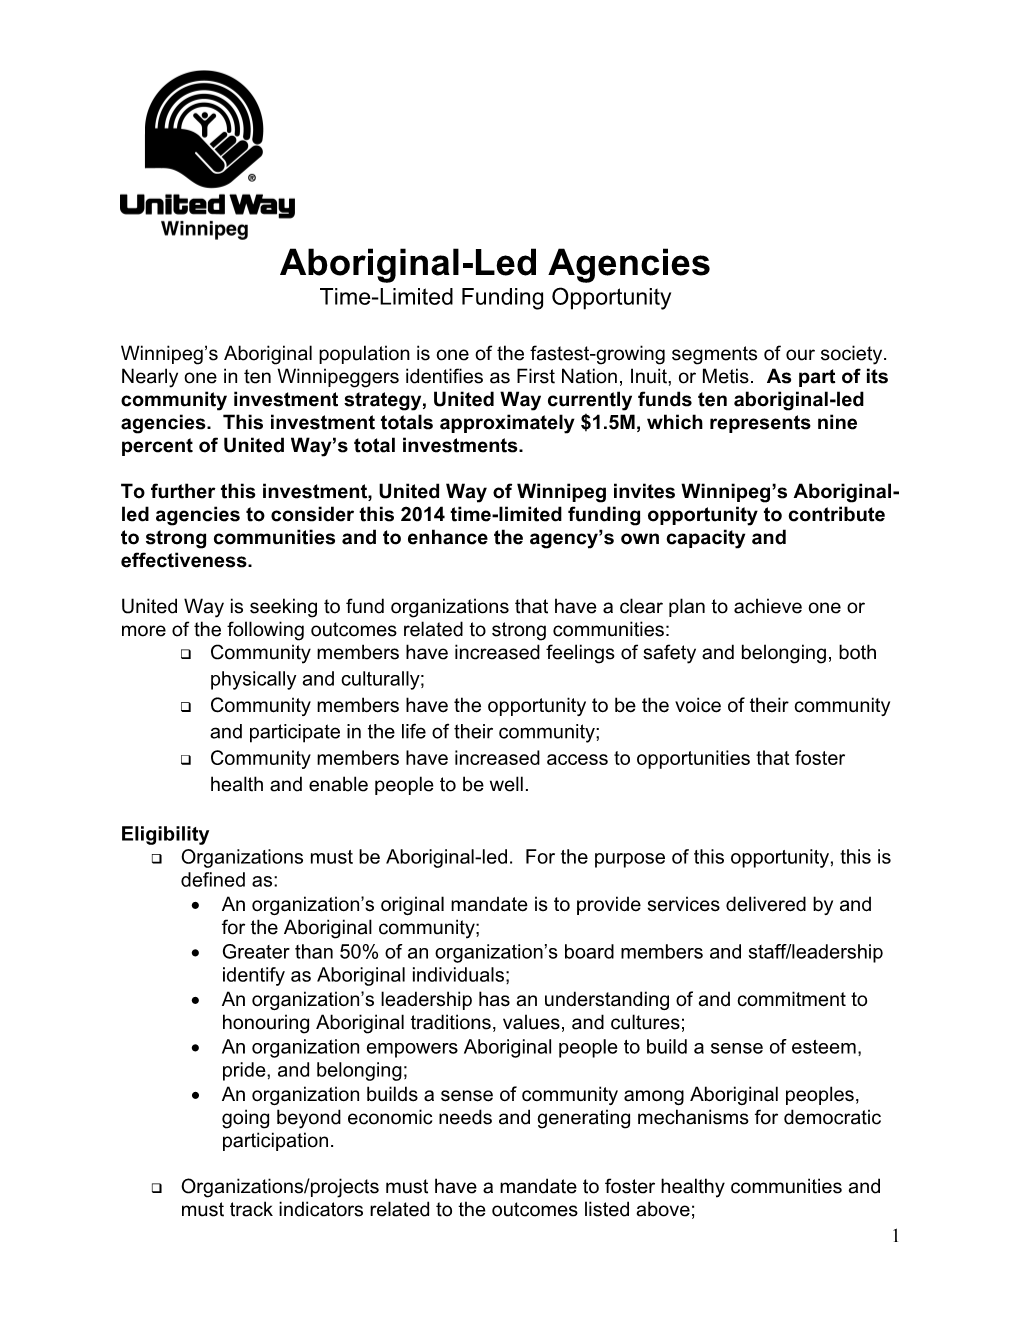 To Further This Investment, United Way of Winnipeg Invites Winnipeg S Aboriginal-Led Agencies